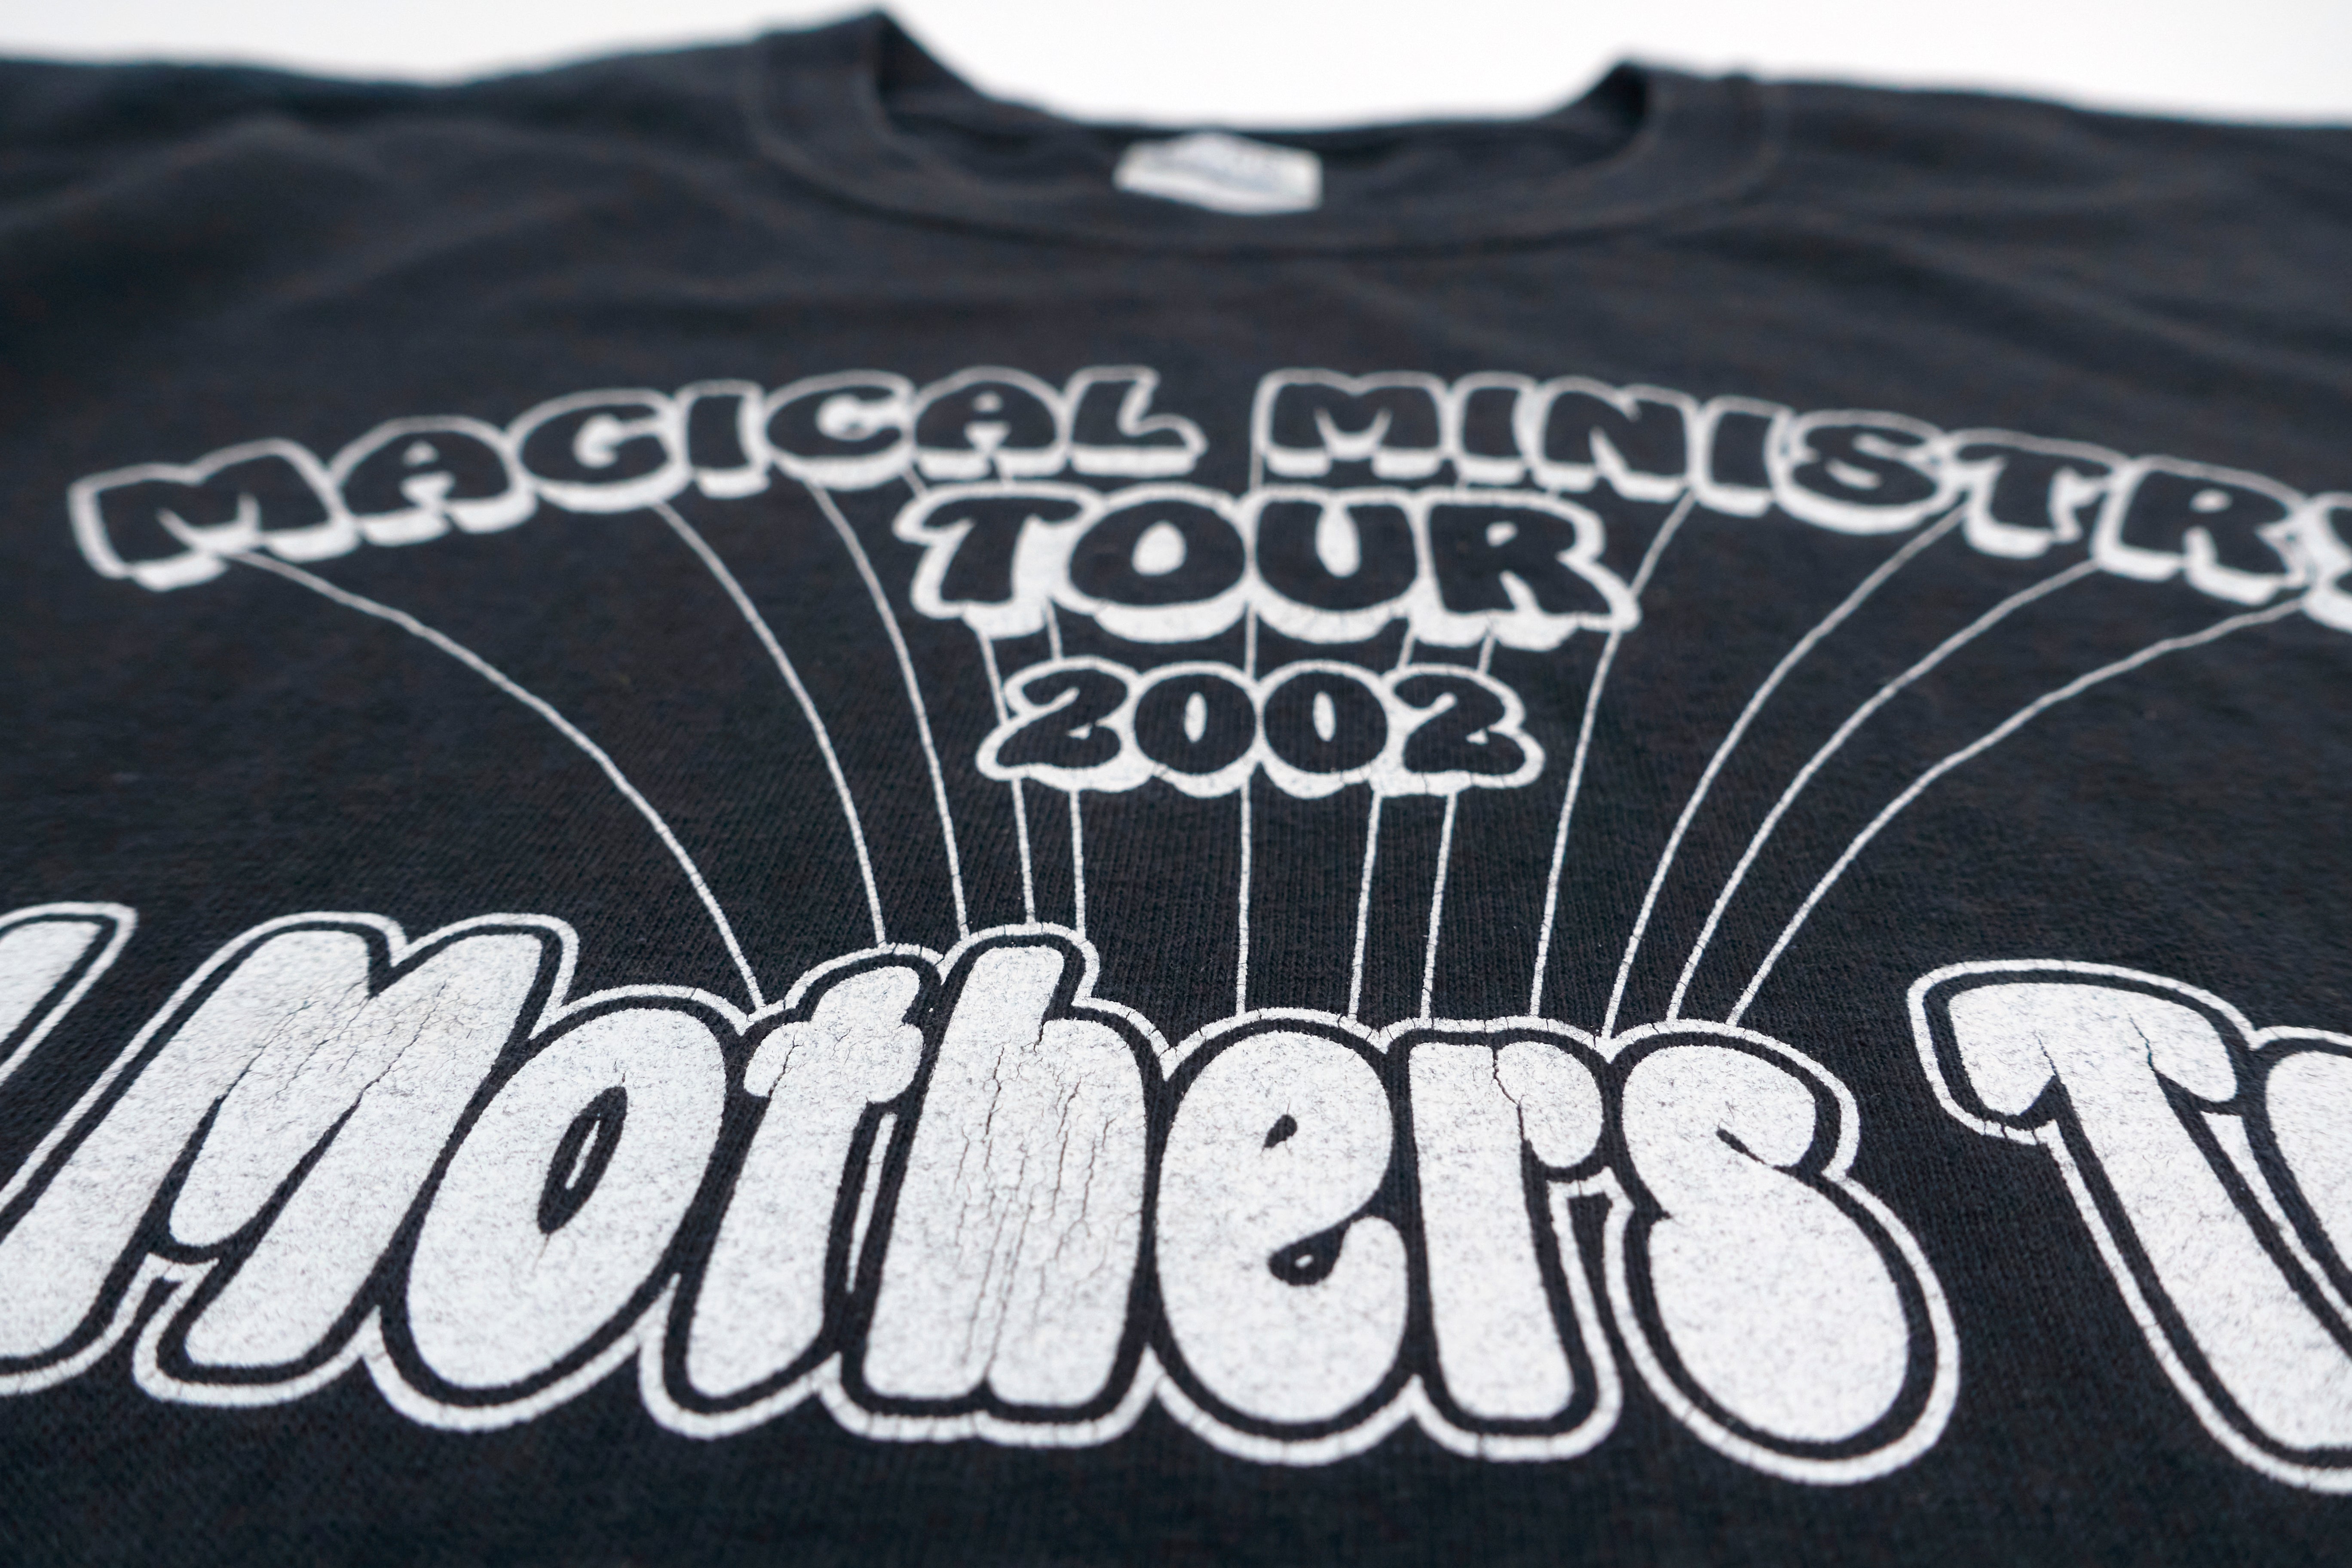 Acid Mothers Temple – Magical Ministry 2012 Tour Shirt Size XL